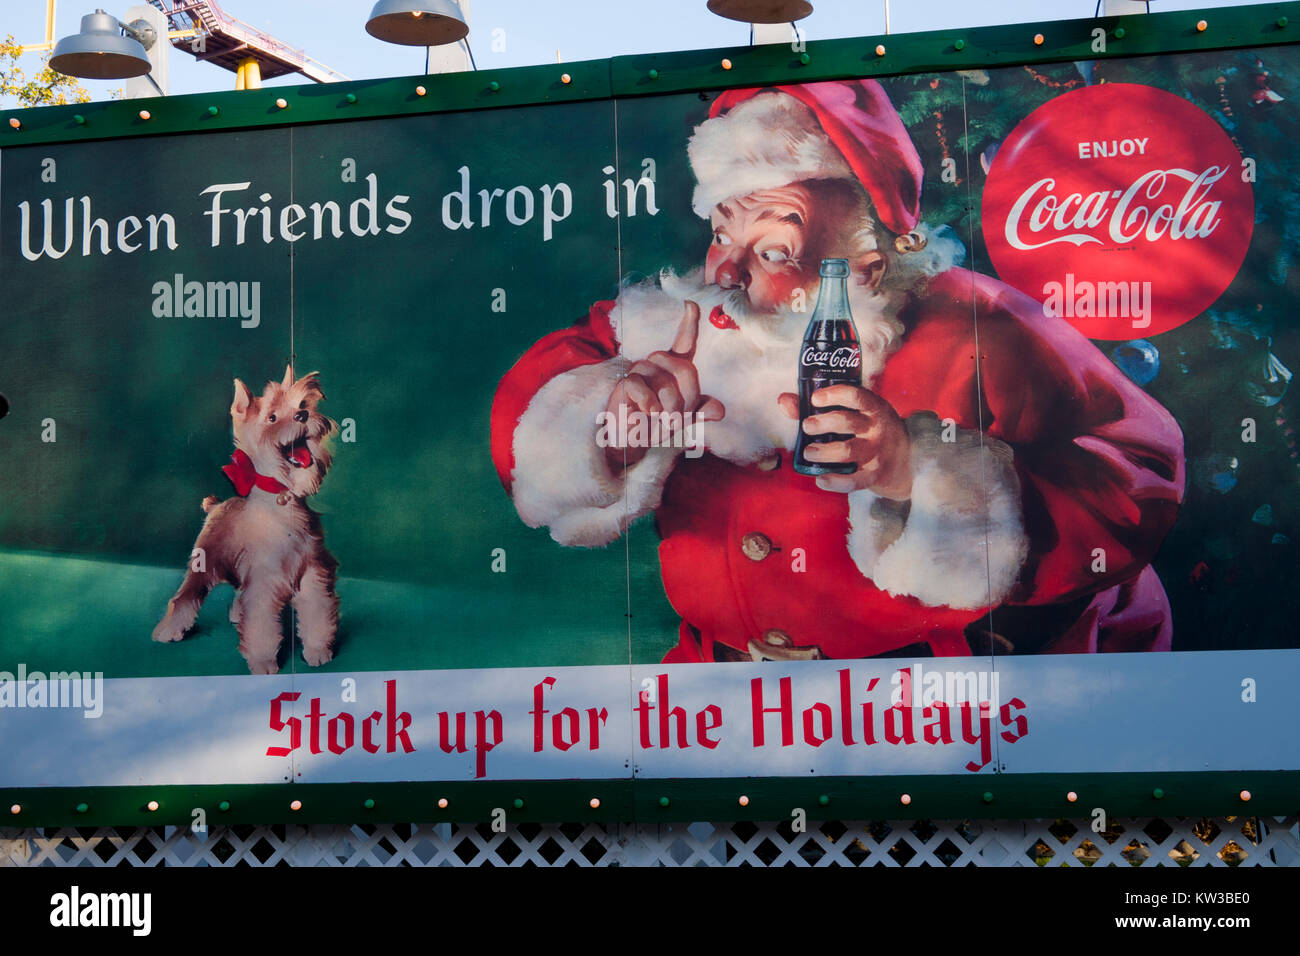 USA Virginia VA Williamsburg Christmas holiday at Busch Gardens theme park a vintage style Coca Cola billboard advertisment Stock Photo